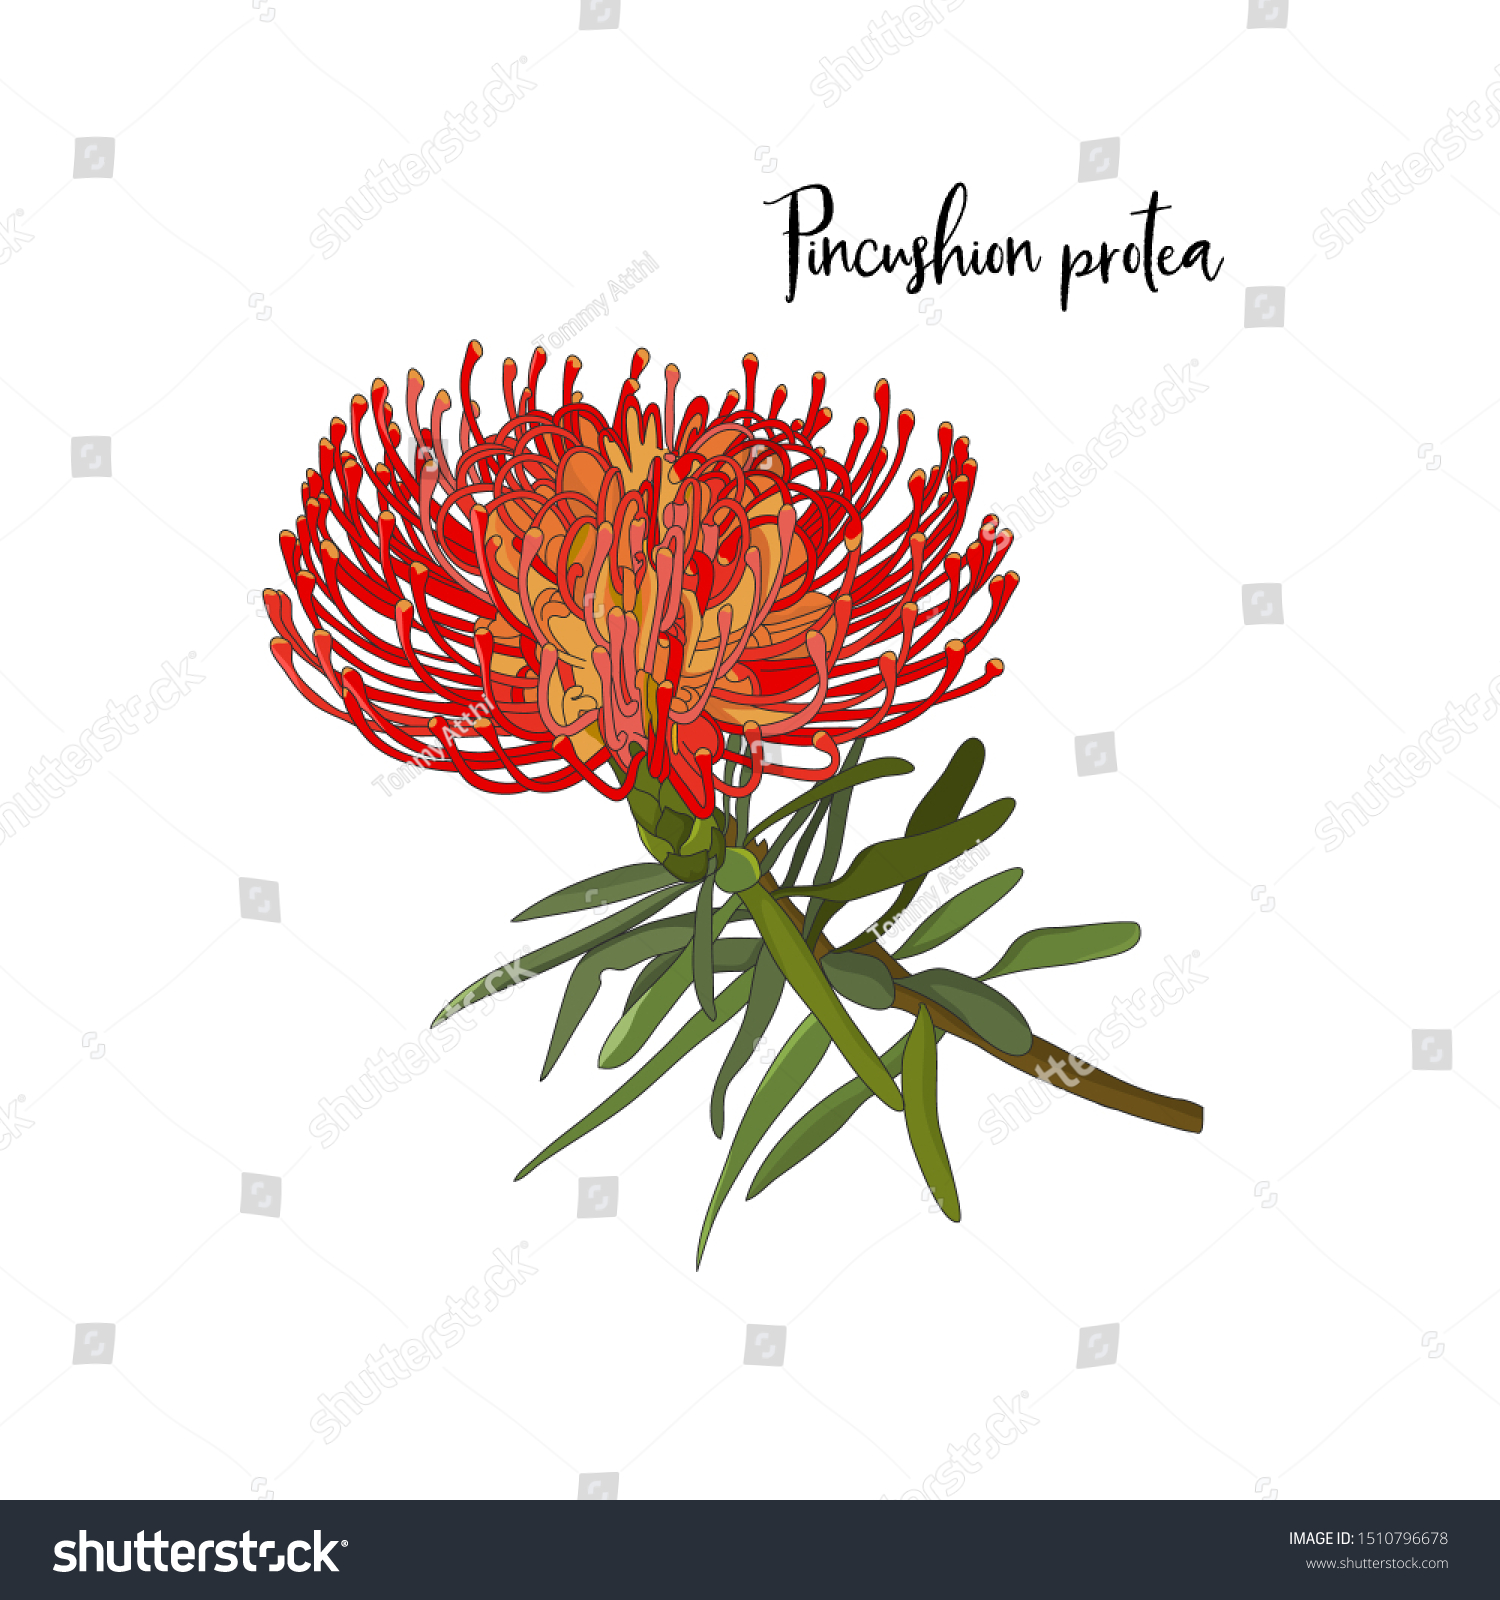 Hand Drawn Pincushion Proteaaustralia Native Flower Stock Vector Royalty Free 1510796678